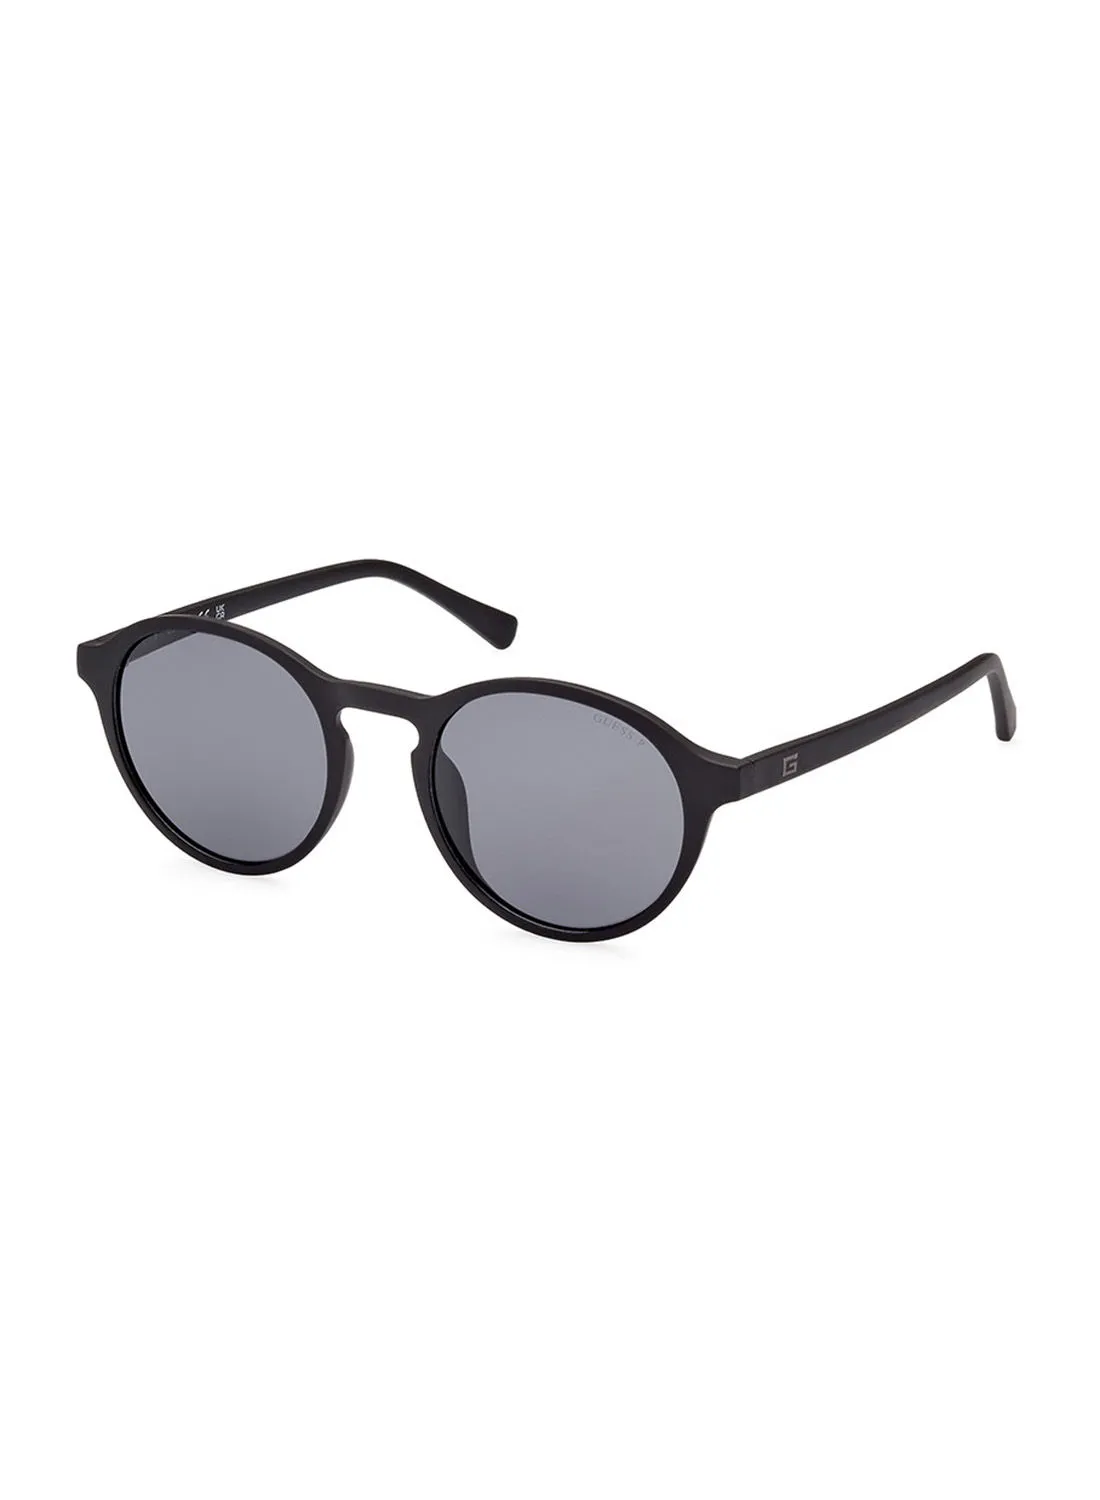 GUESS Sunglasses For Men GU0006202D51